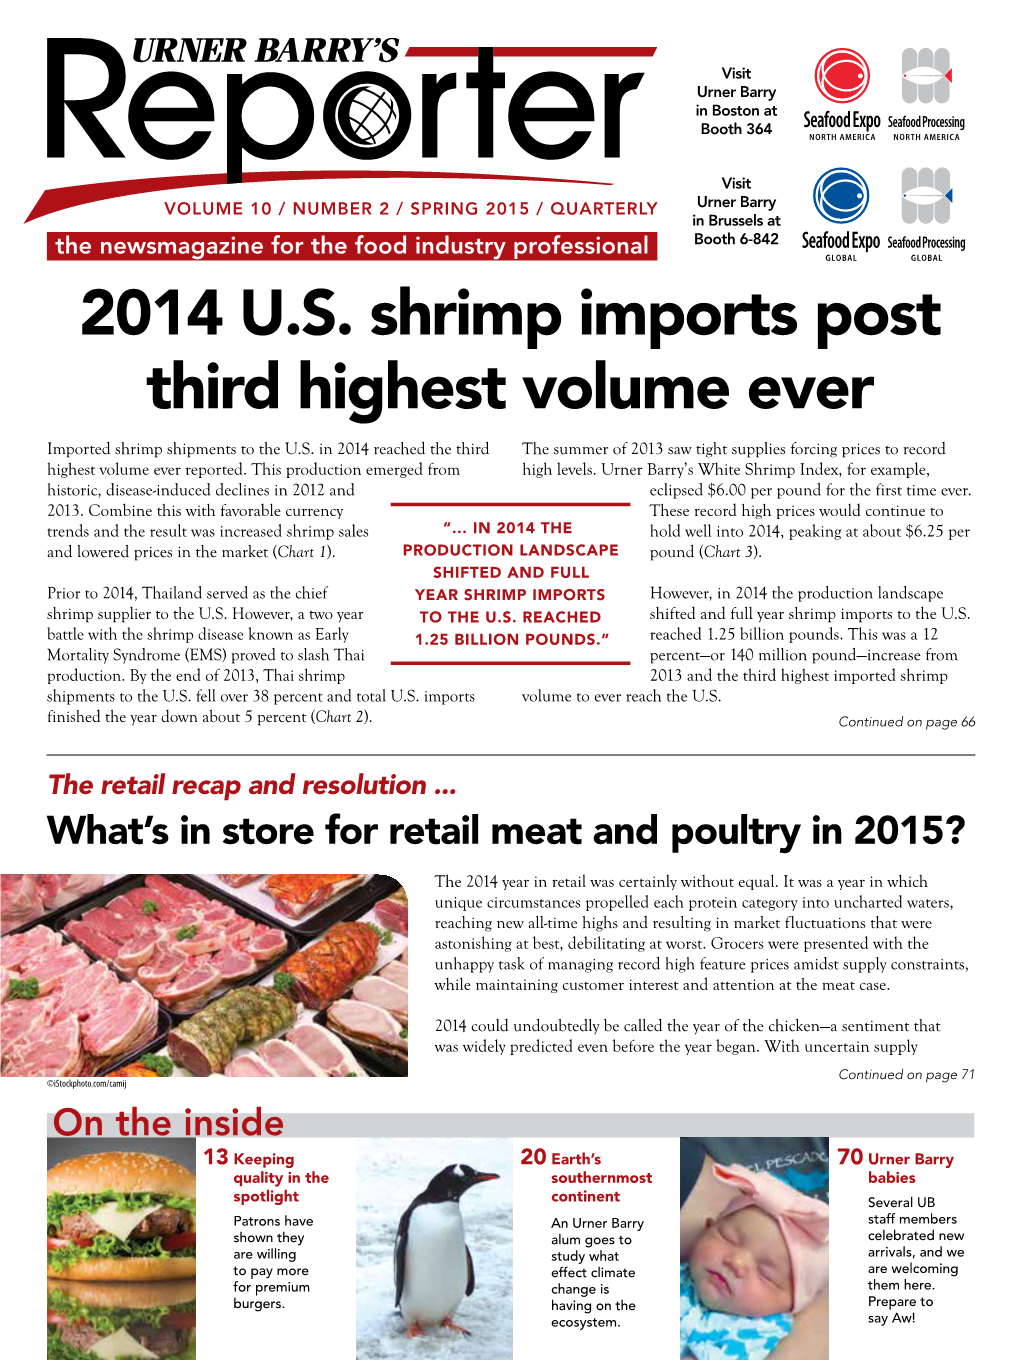 2014 U.S. Shrimp Imports Post Third Highest Volume Ever